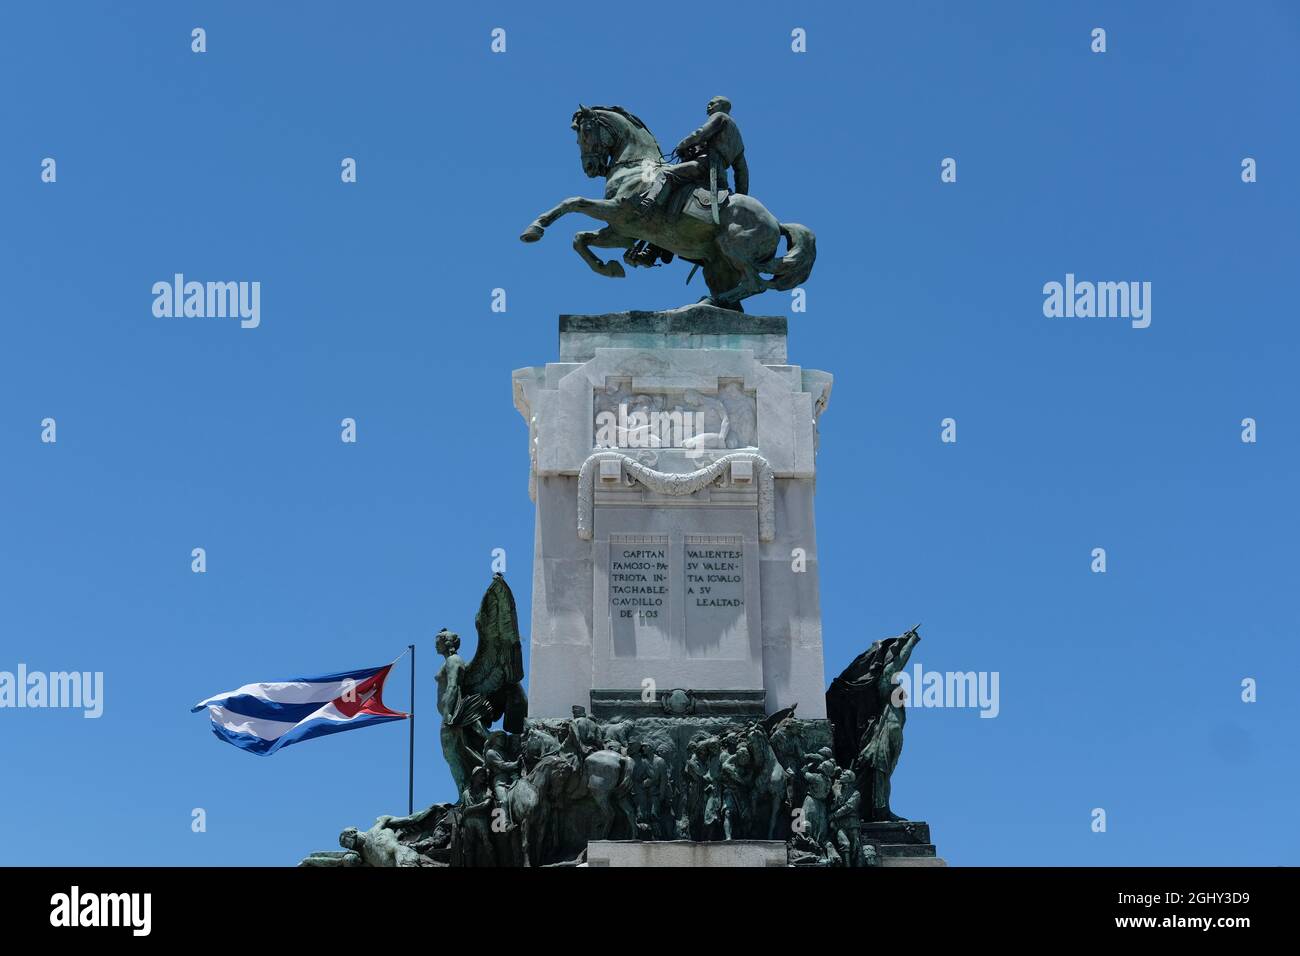 The statue of Antonio Maceo on the Malecon in Havana, Cuba. Stock Photo